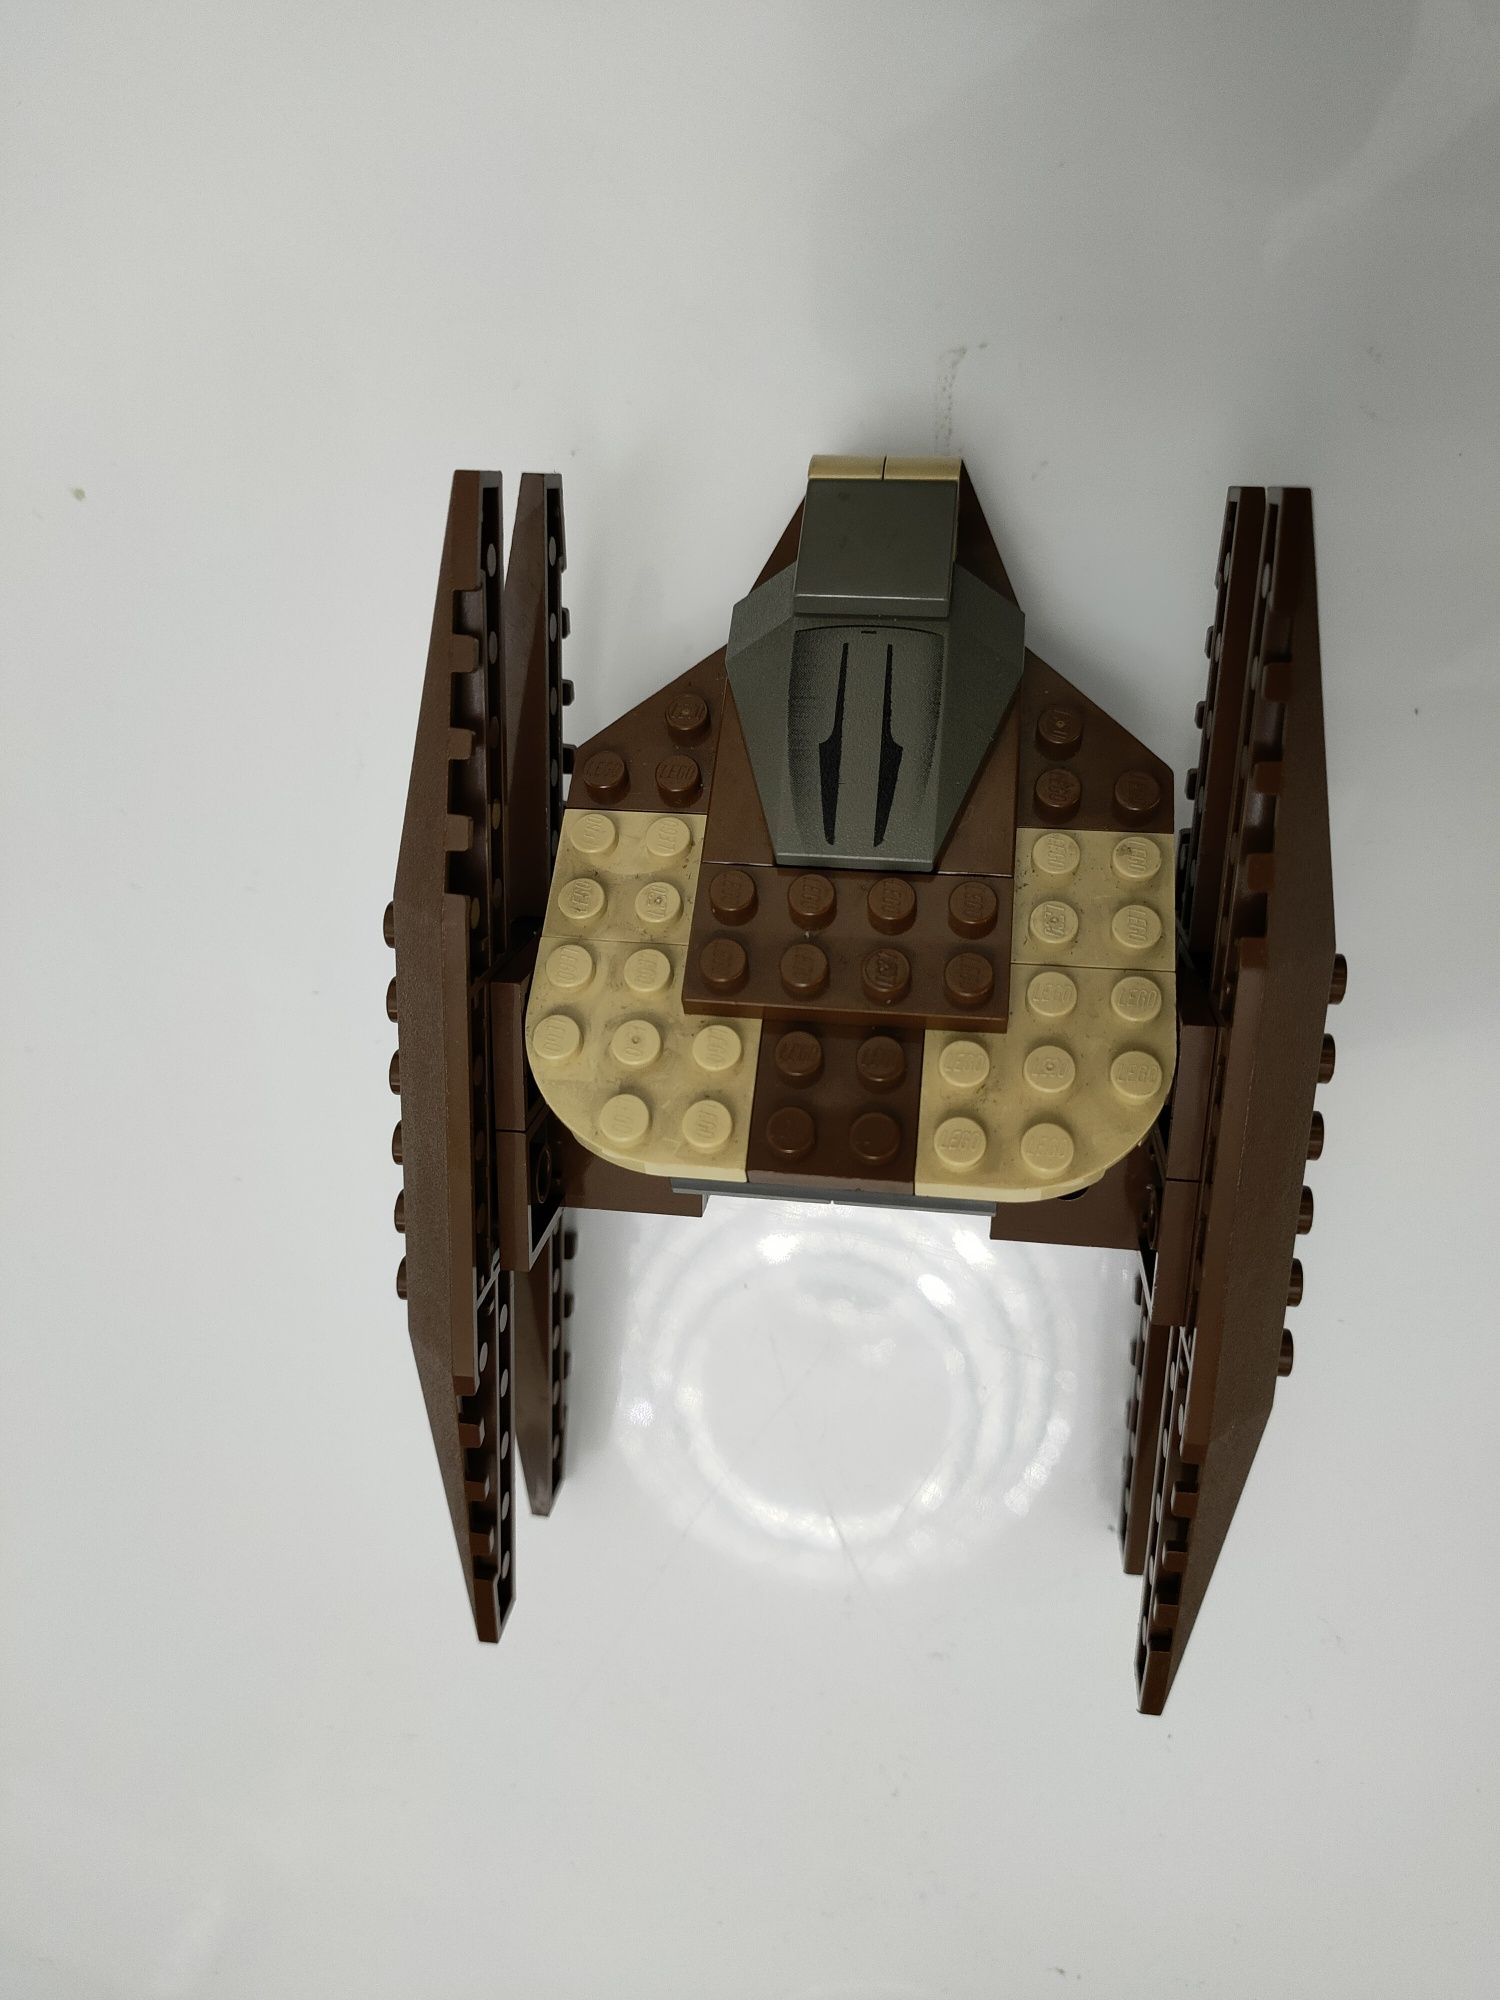 Klocki lego star wars zestaw 7111 Droid Fighter